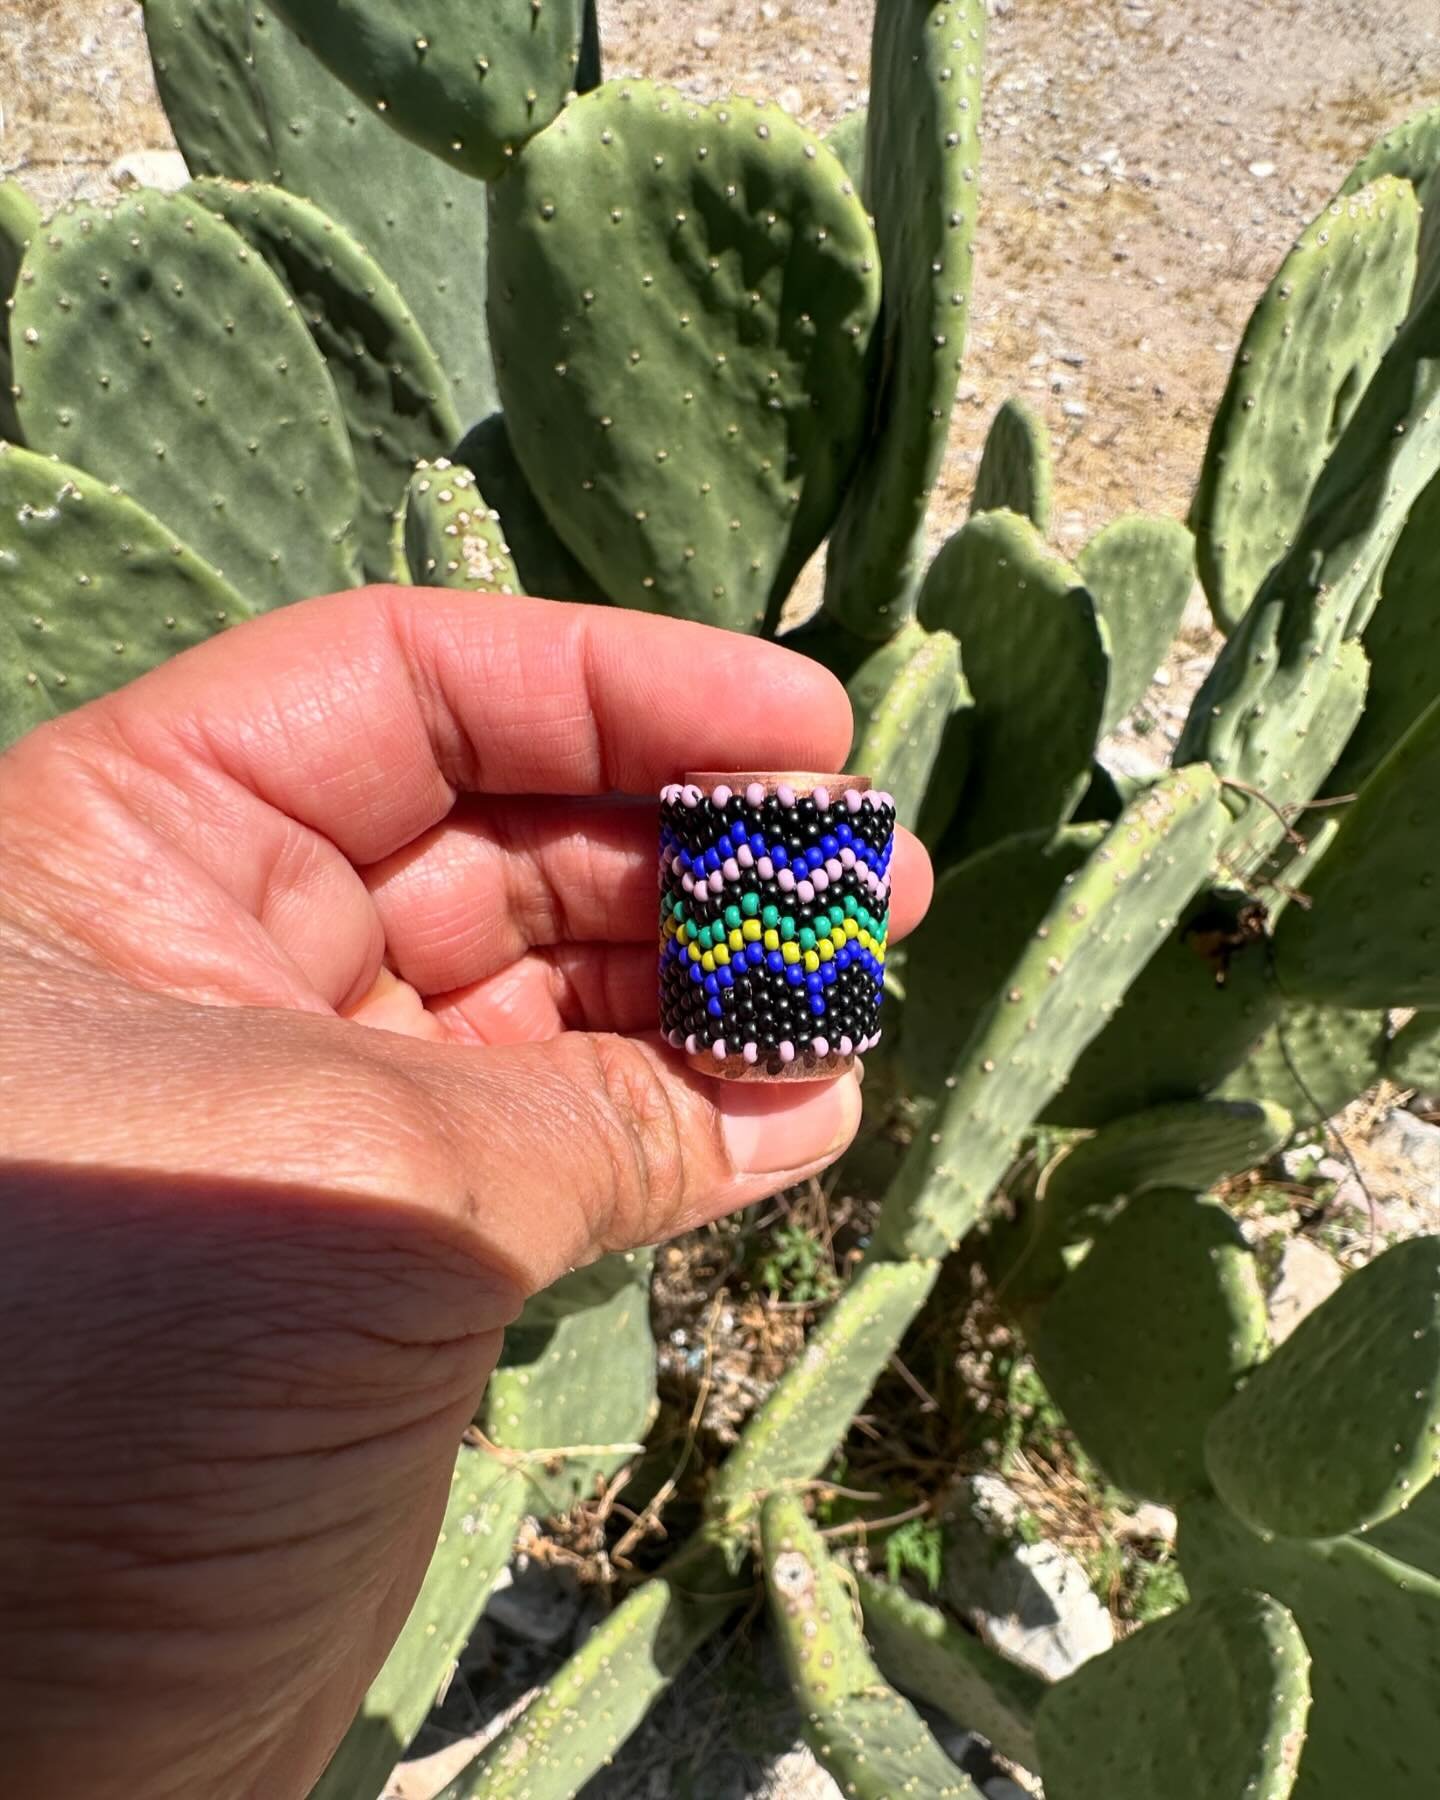 Copper &amp; Peyote bandana/scarf ties now available&hellip;.flowers were on my mind
Working on some minis too!

#beadworkerofelpaso
#beadworker 
#elpasotx
#elpaso
#aghaahatco
#inspiredbynature 
#desertstyle